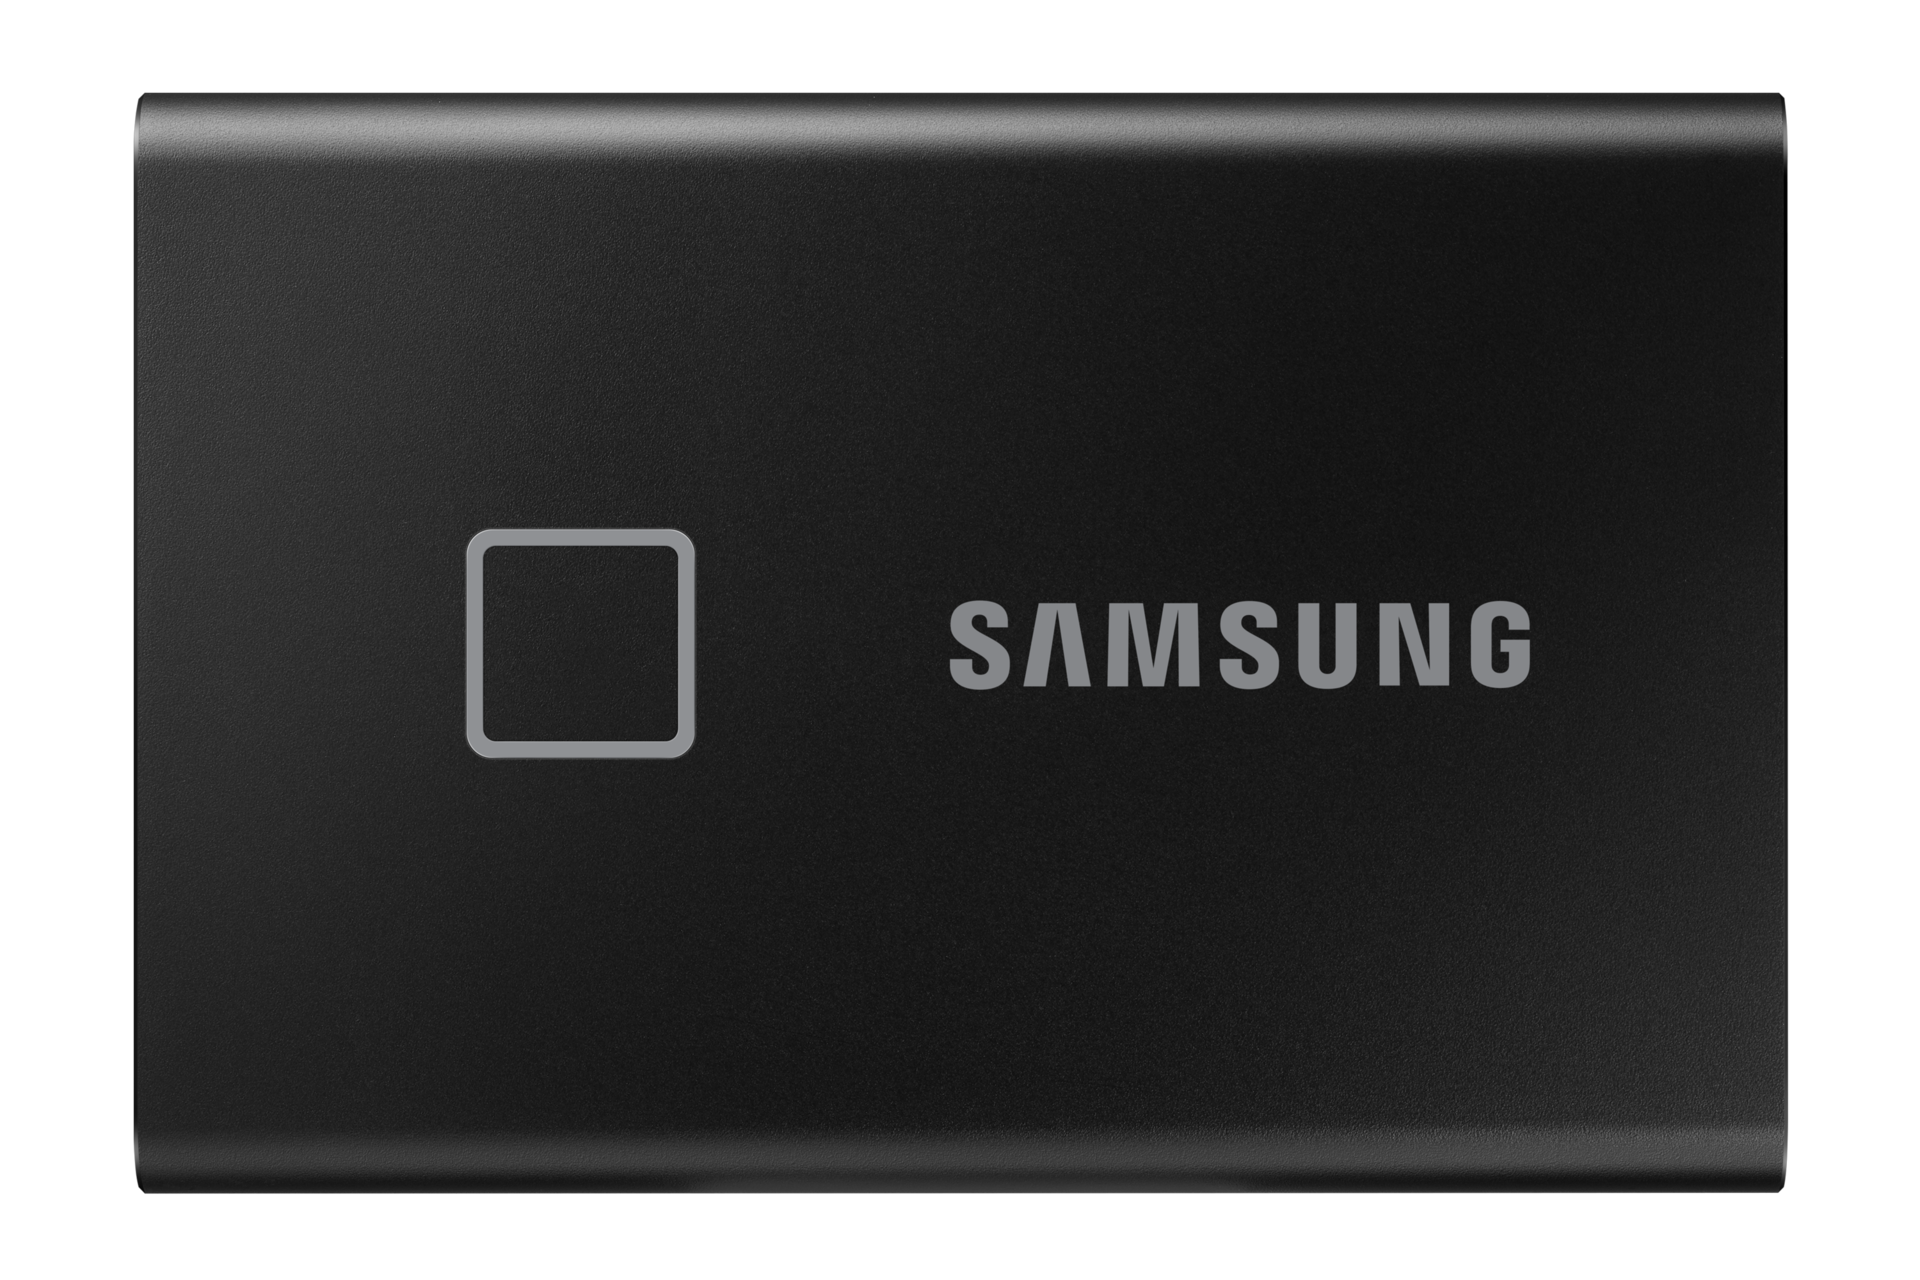 SSD T7 Touch portable 3.2, MU-PC2T0K